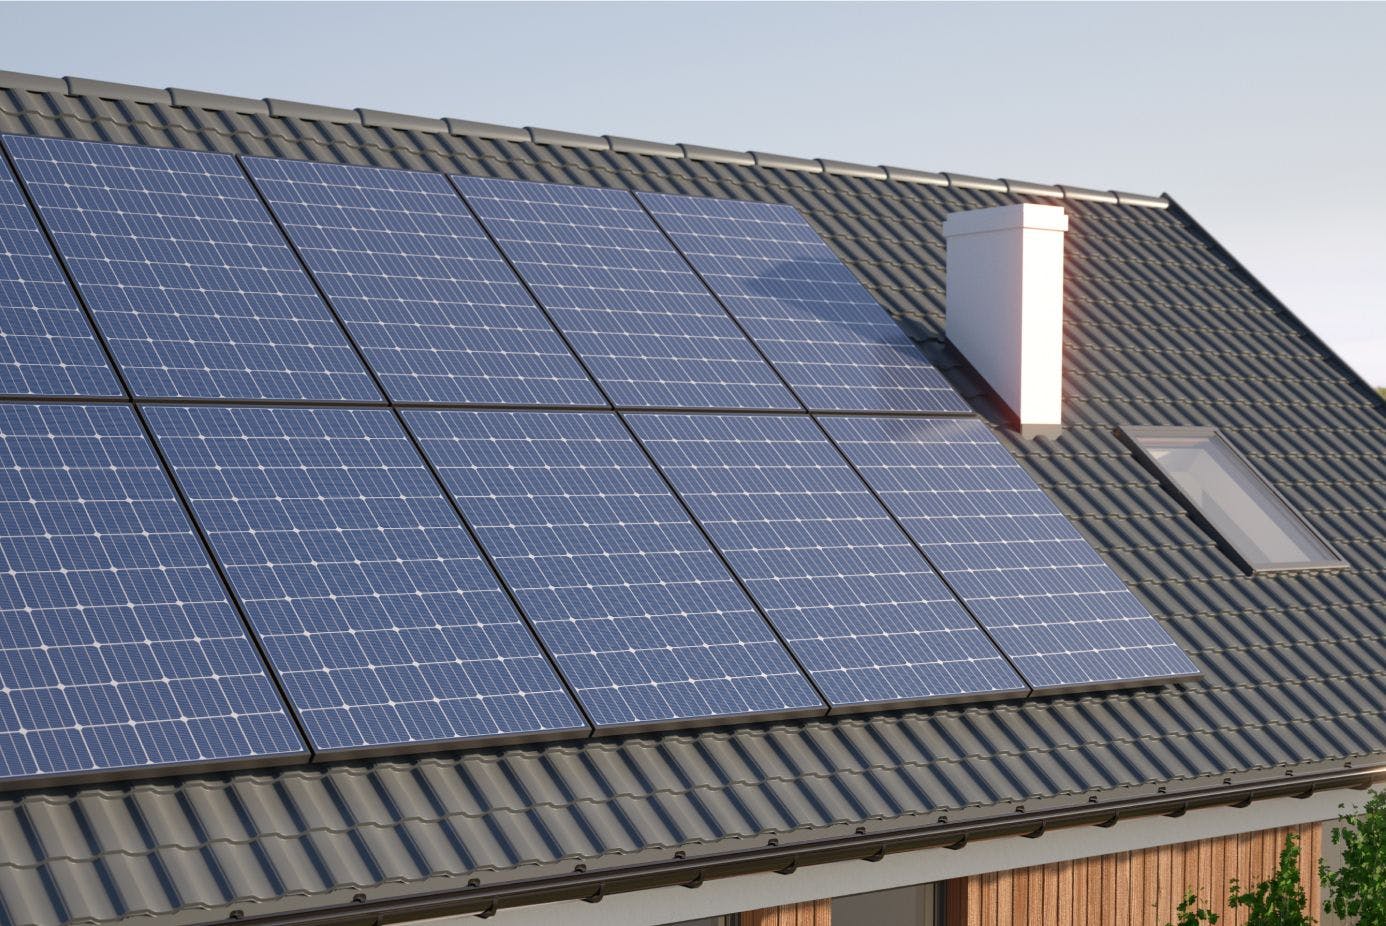 Ten solar panels on a roof